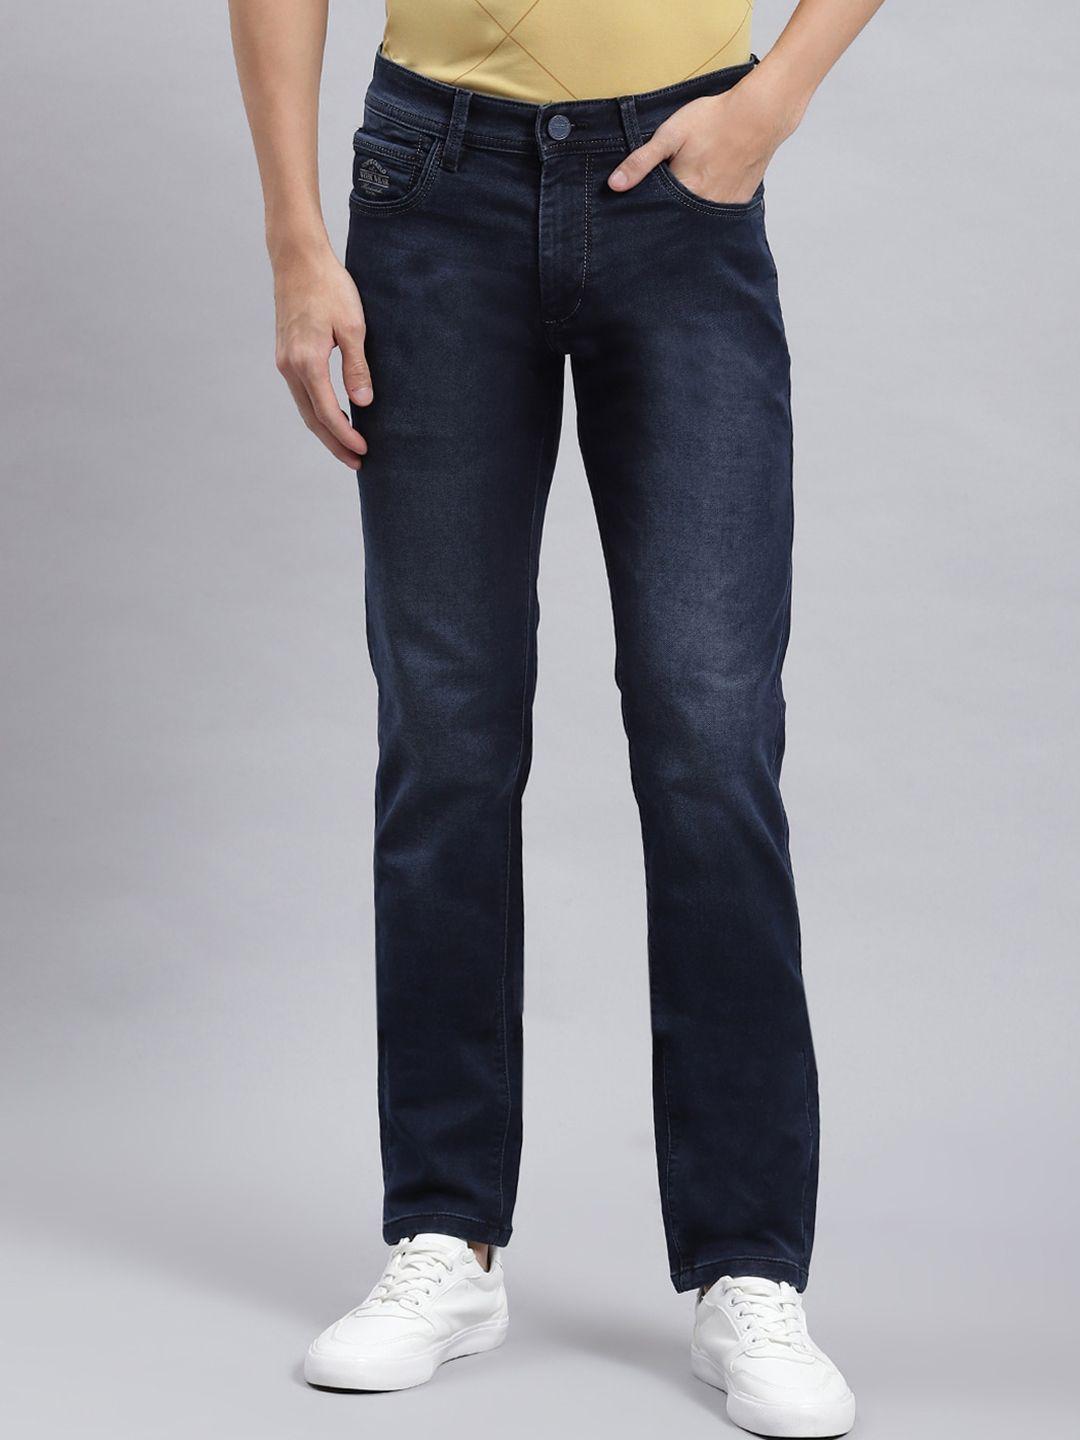 monte-carlo-men-smart-slim-fit-mid-rise-light-fade-jeans